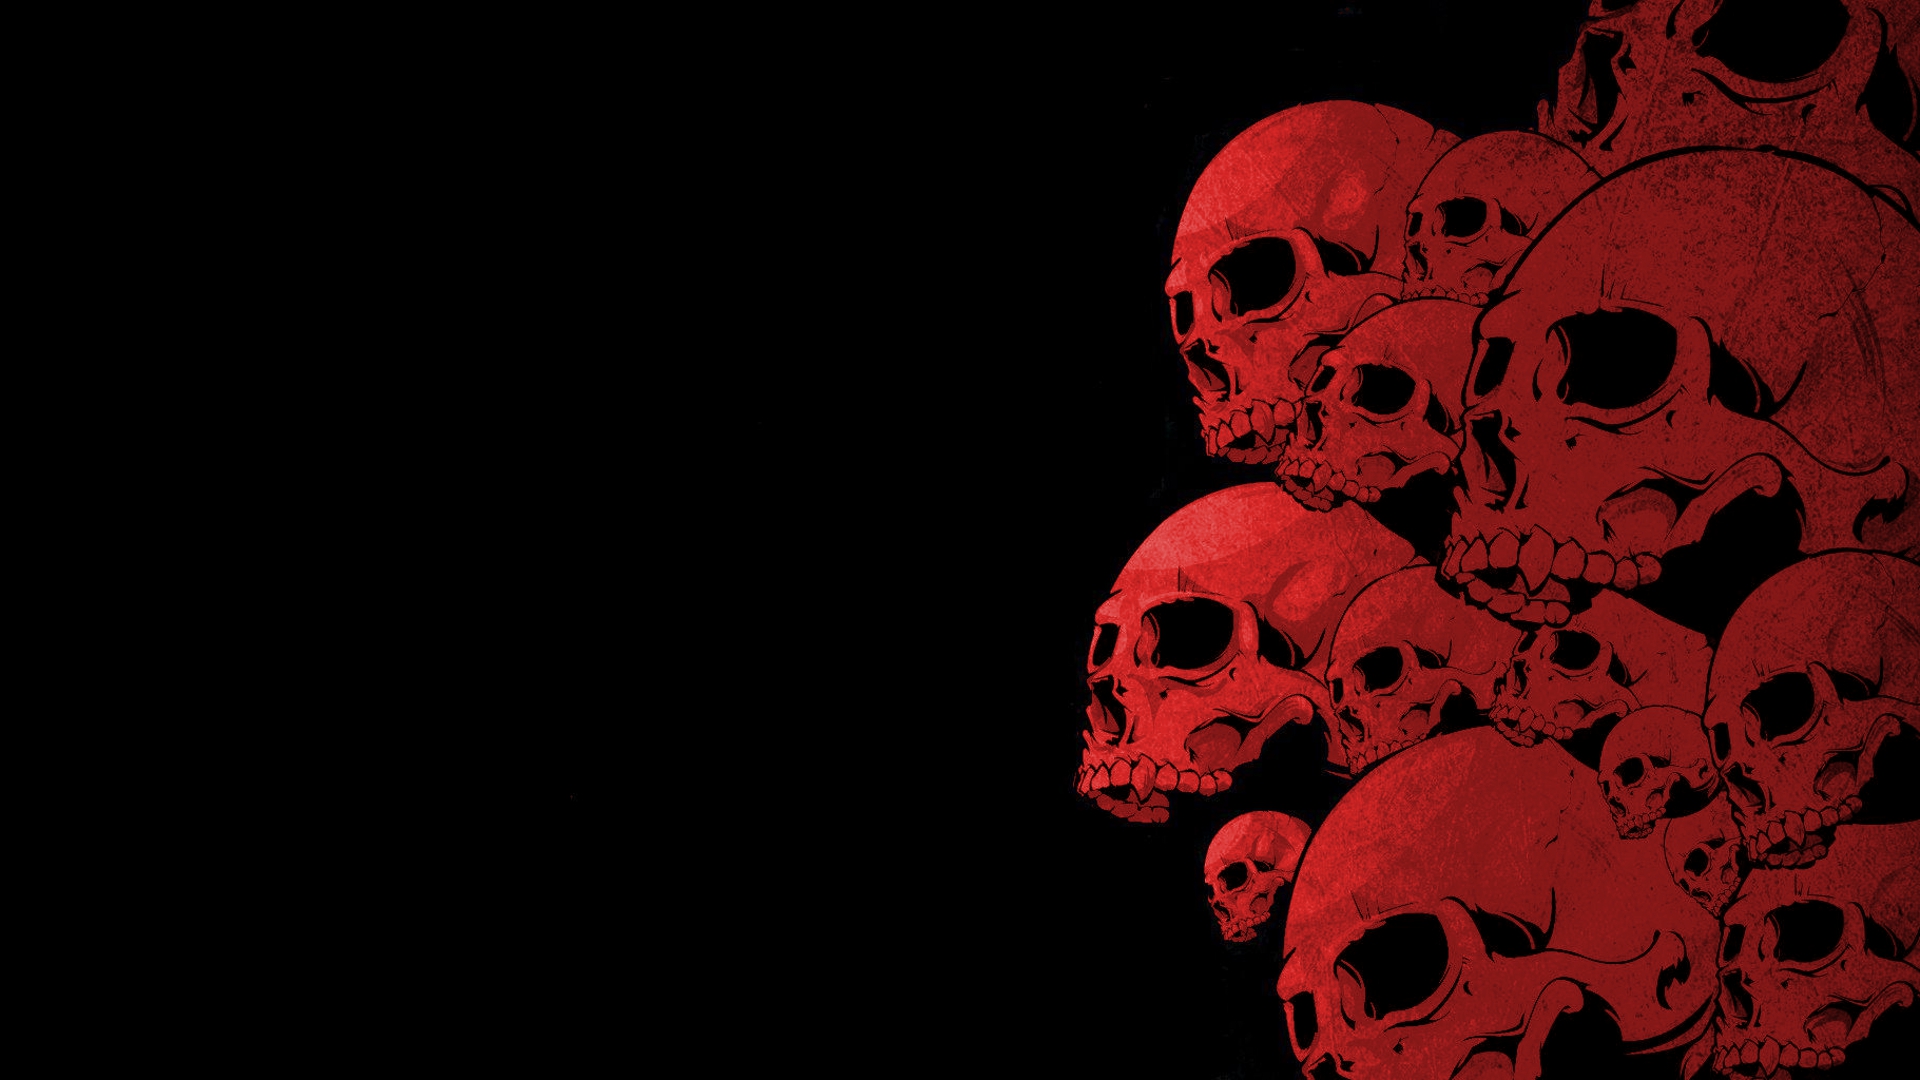  Skull  HD  Wallpaper  Background Image 1920x1080 ID 